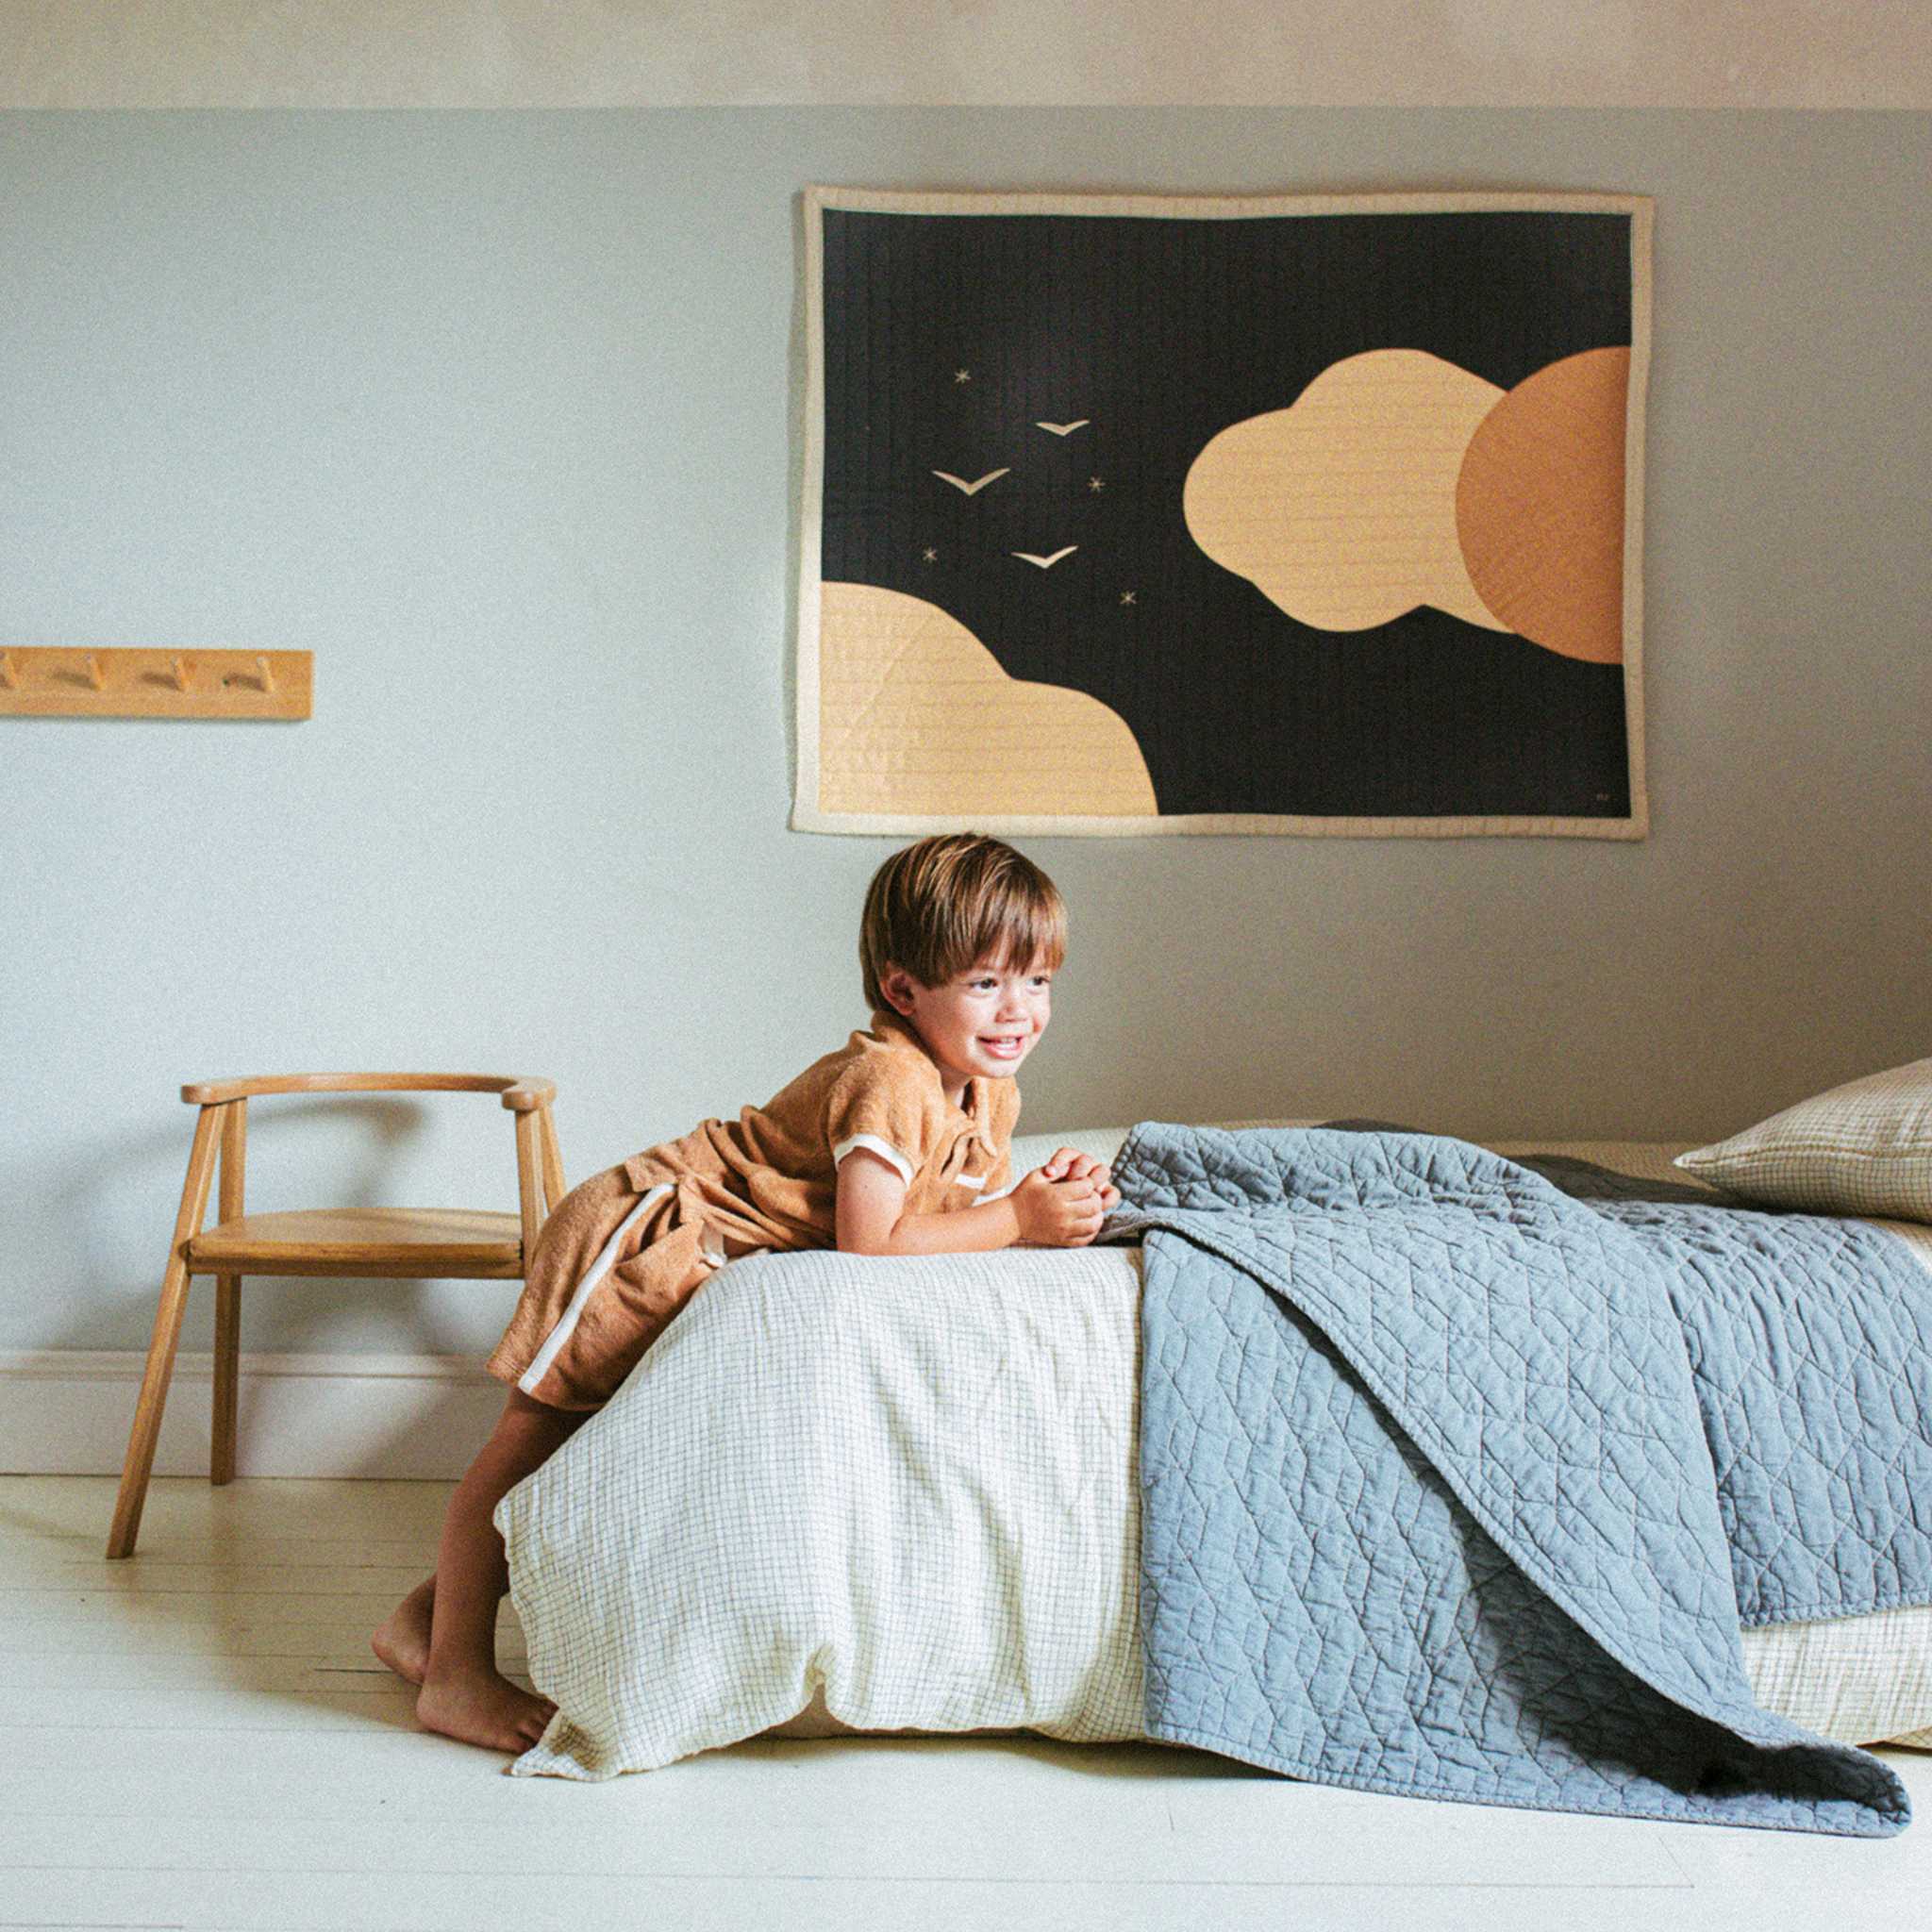 Nobodinoz Wabi Sabi Quilted Blanket - Azure - On Bed With Child